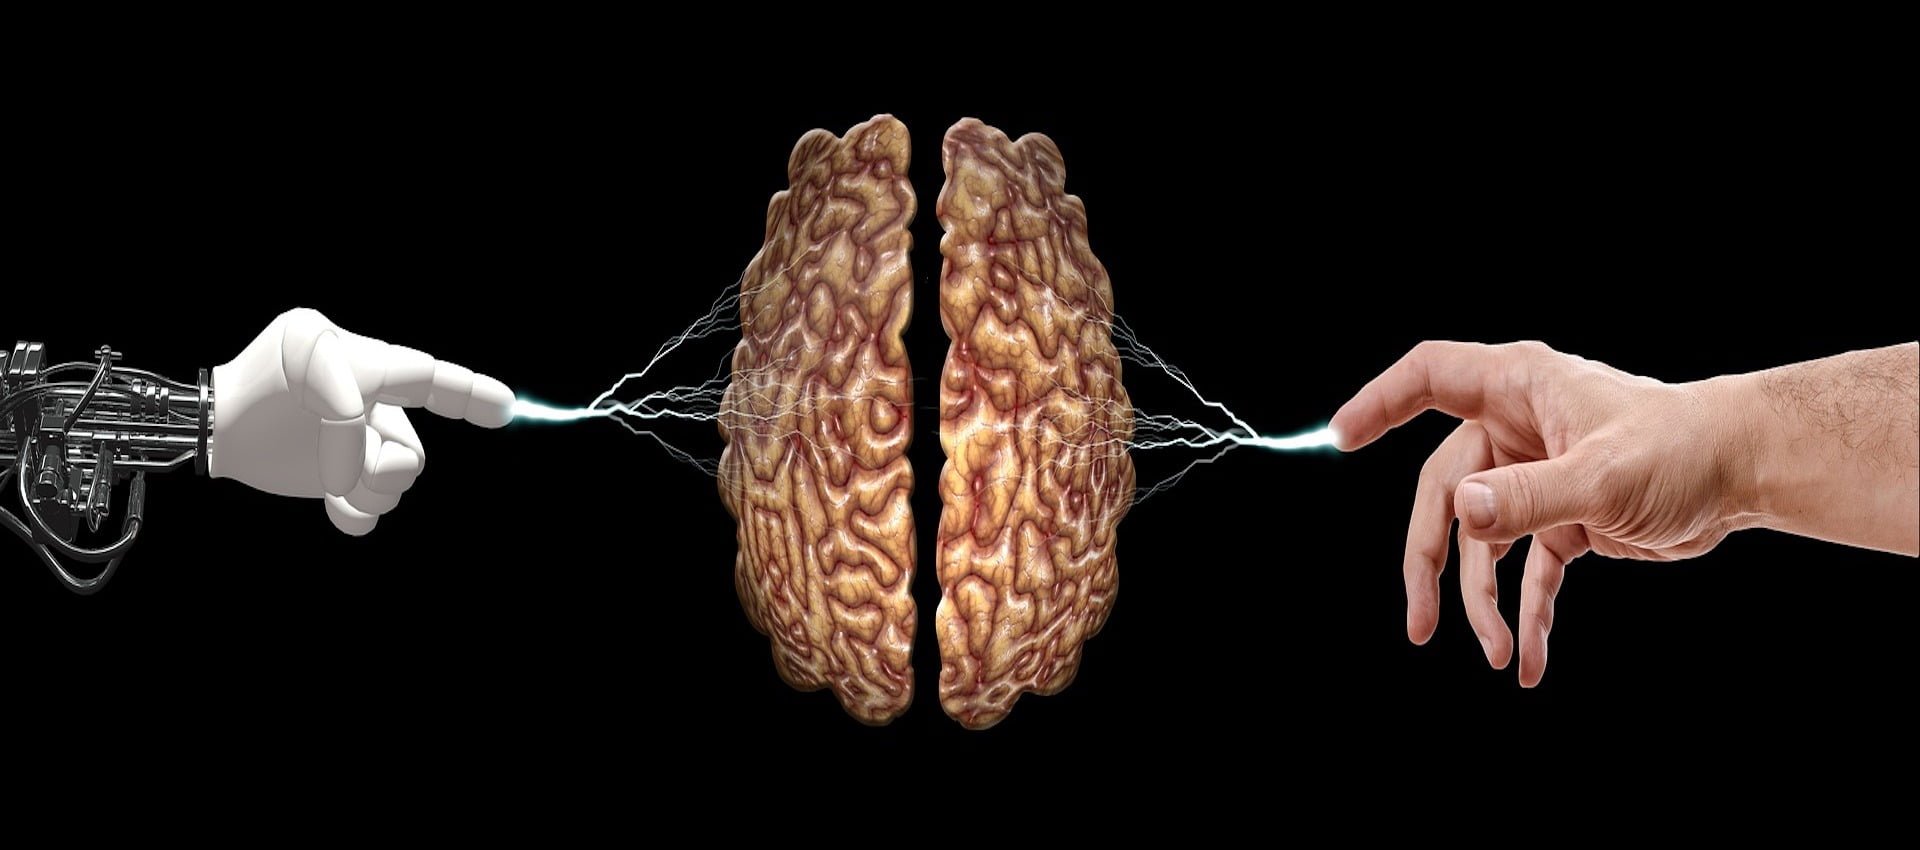 Пальцы рук и мозг. Мозг в руках. Мозг на ладони. Мозг с руками и ногами.